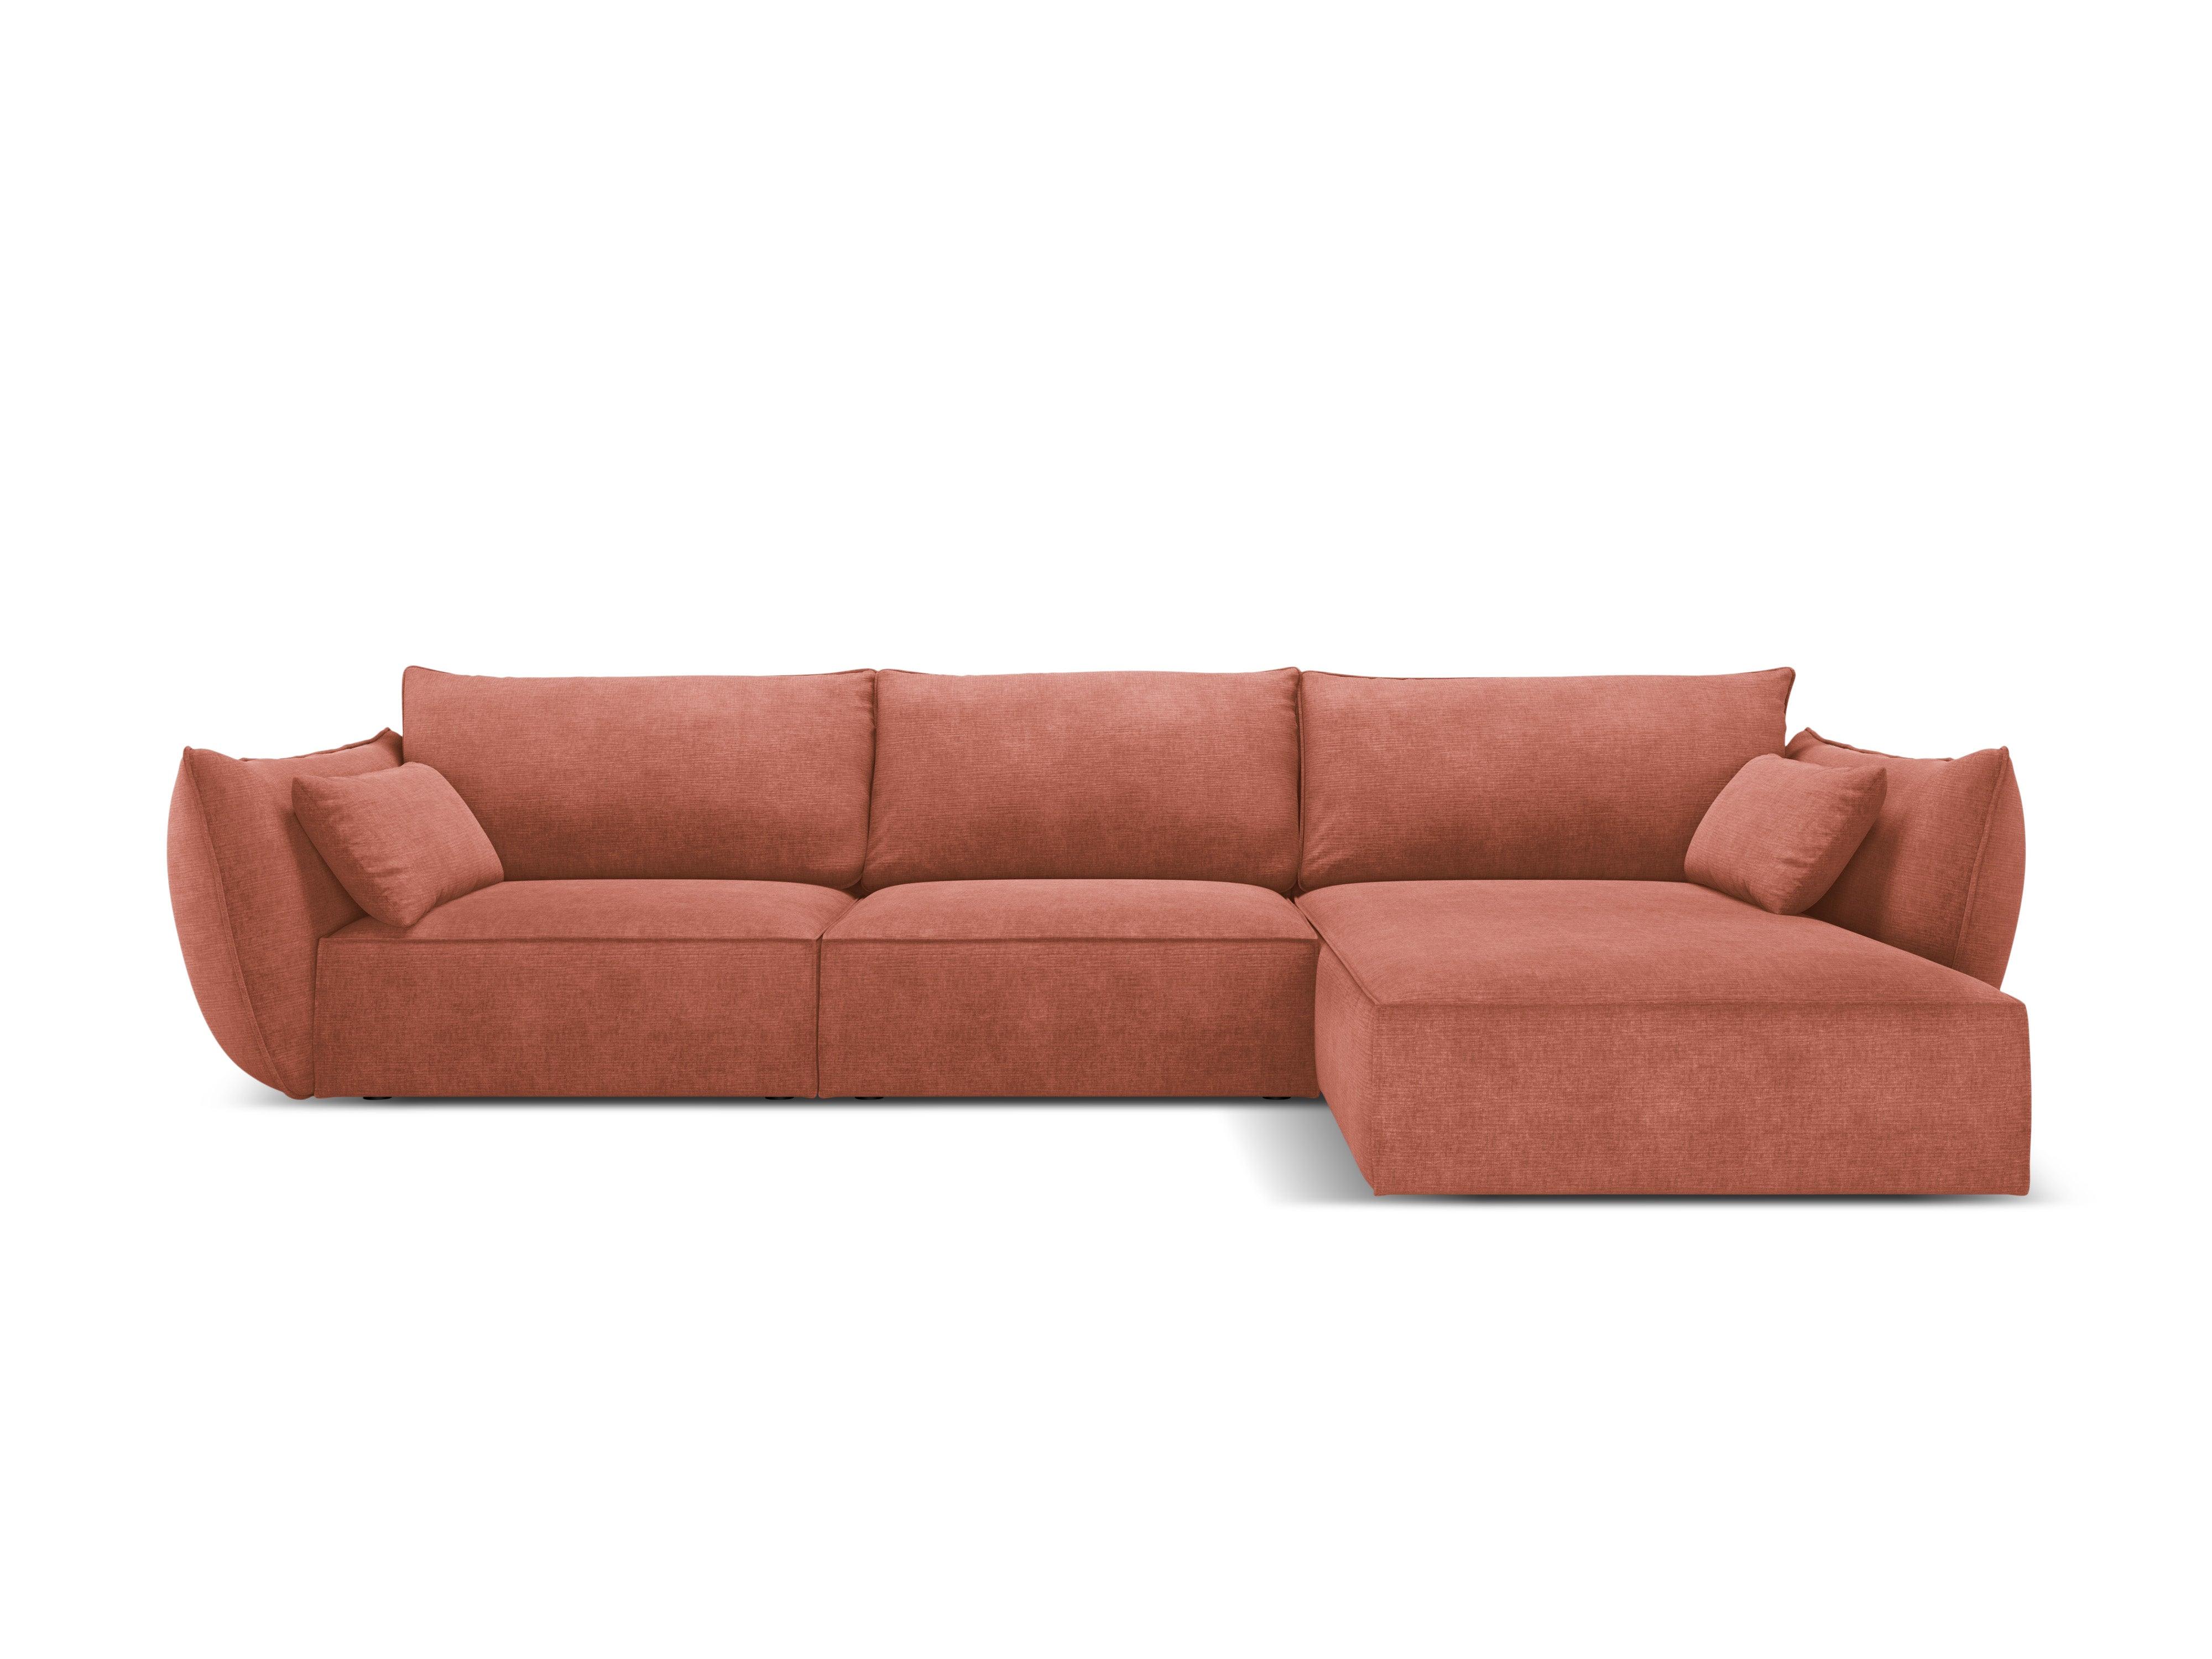 Right Corner Sofa, "Vanda", 4 Seats, 300x166x85
Made in Europe, Mazzini Sofas, Eye on Design